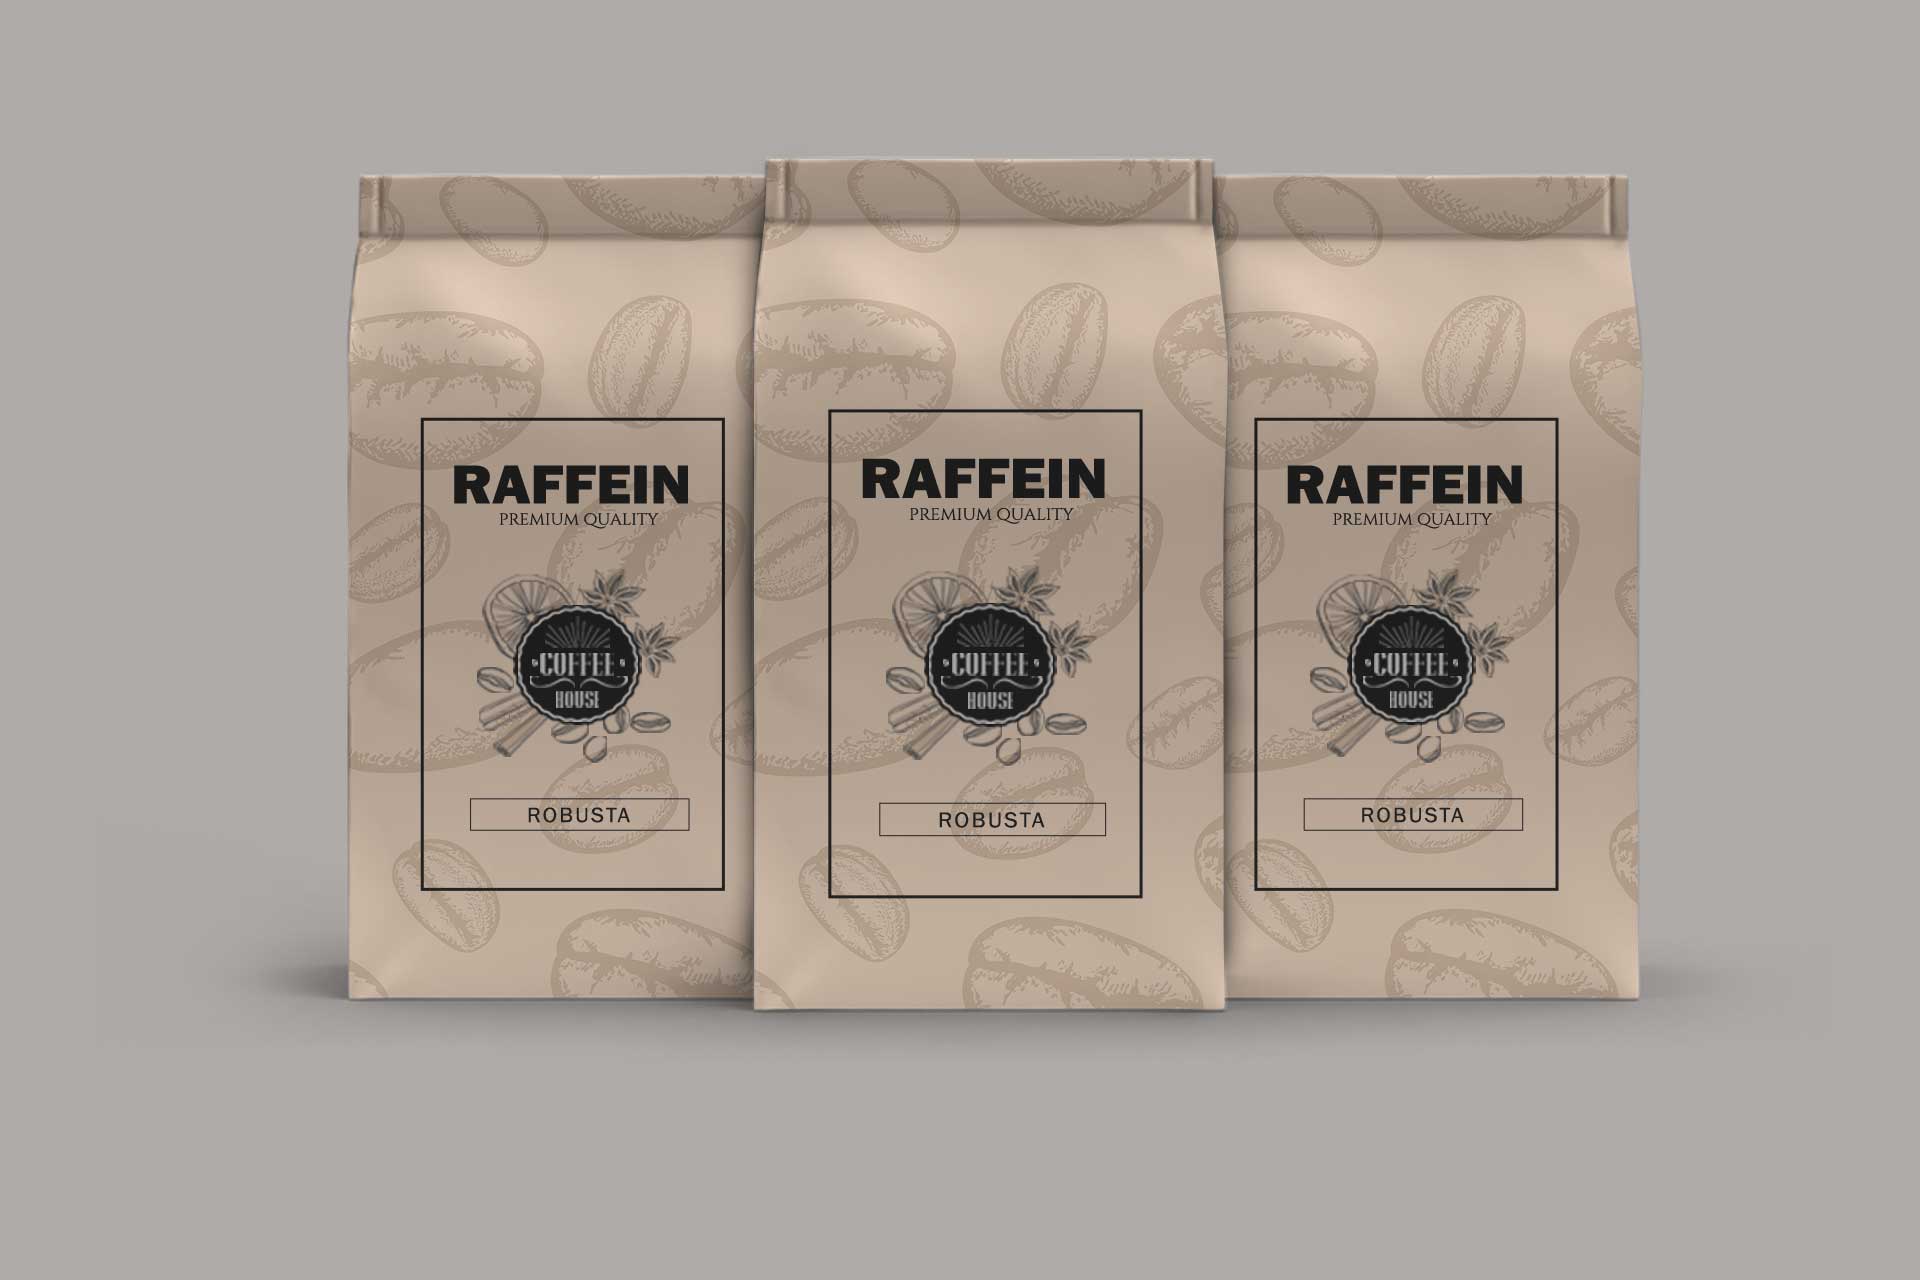 Raffein coffee gets an award for the best coffee